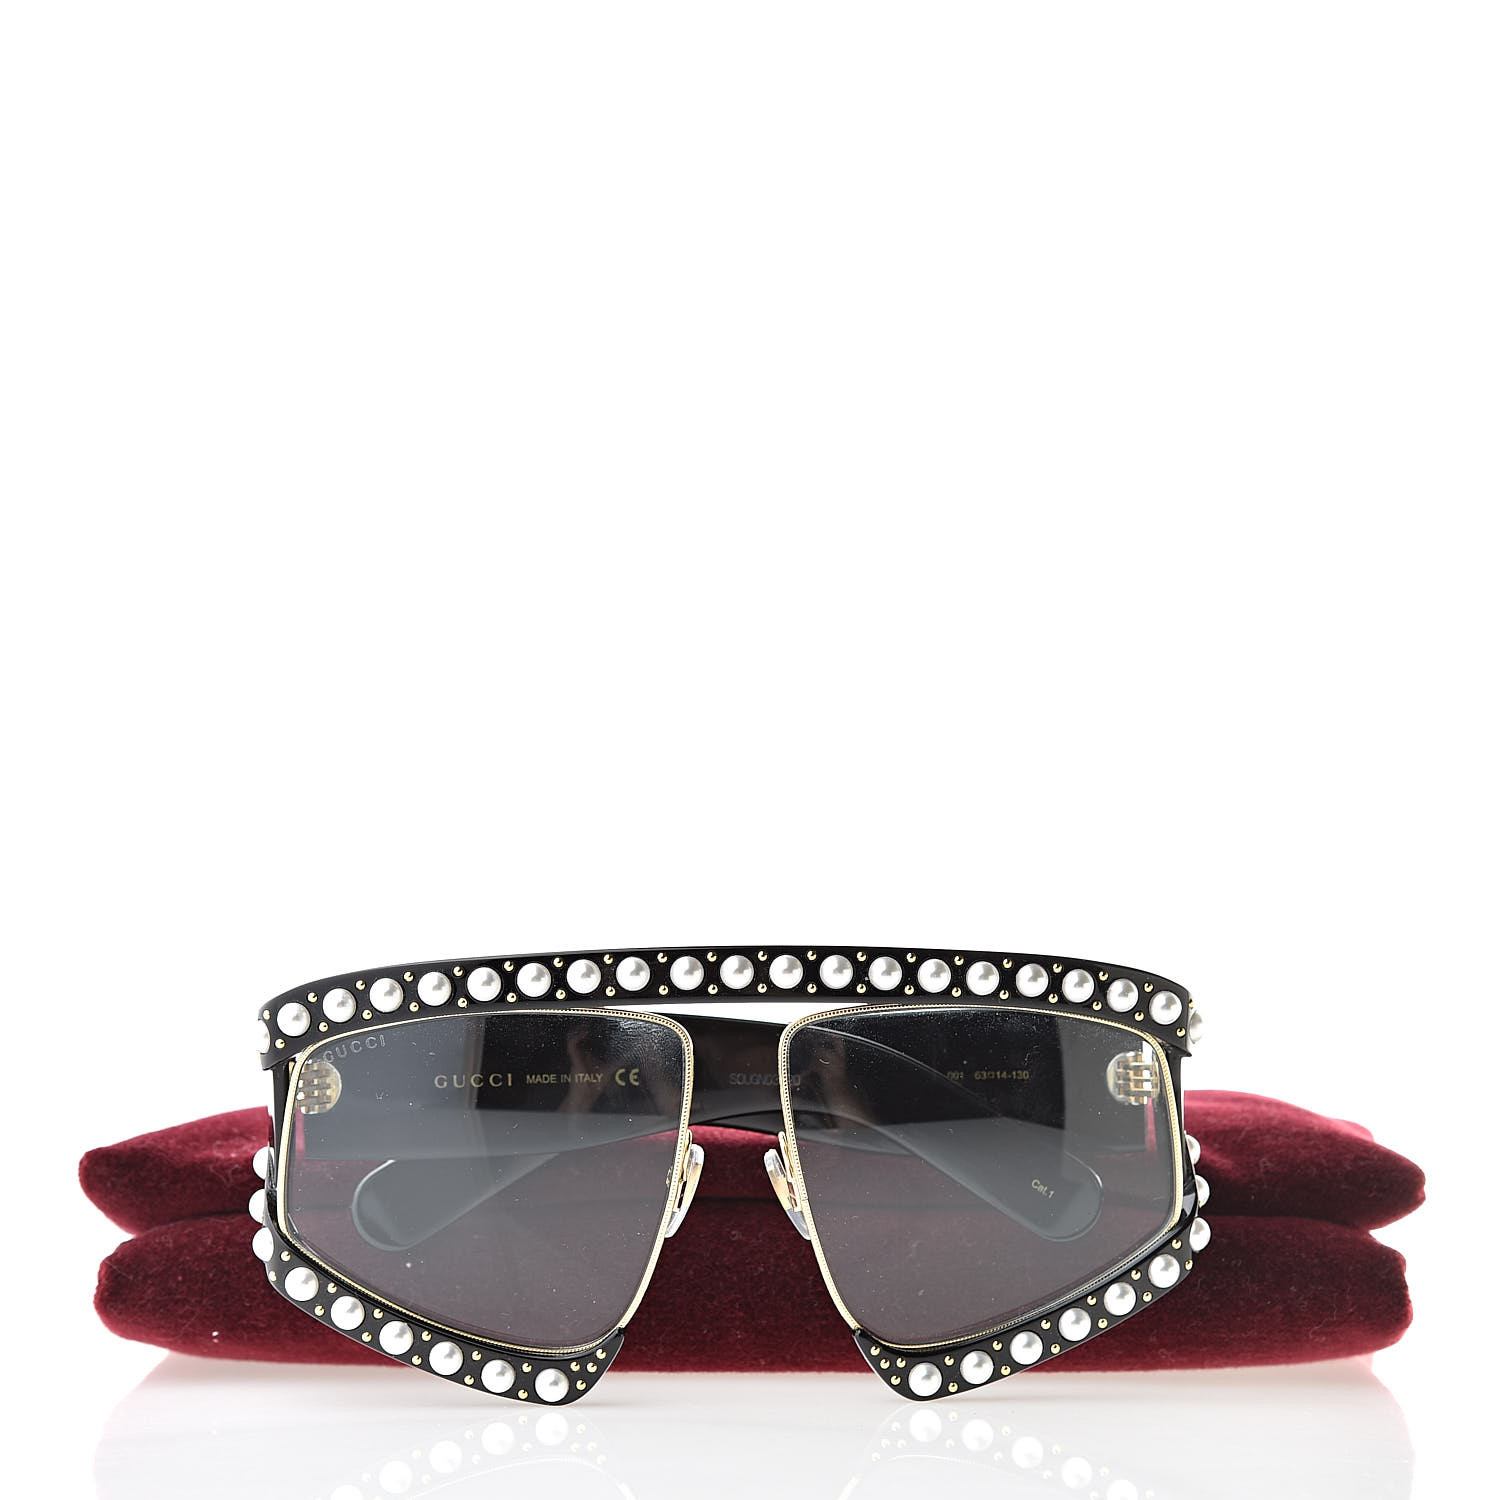 Gucci Acetate Pearl Rectangular Frame Sunglasses Gg0234s Black 523309 Fashionphile 